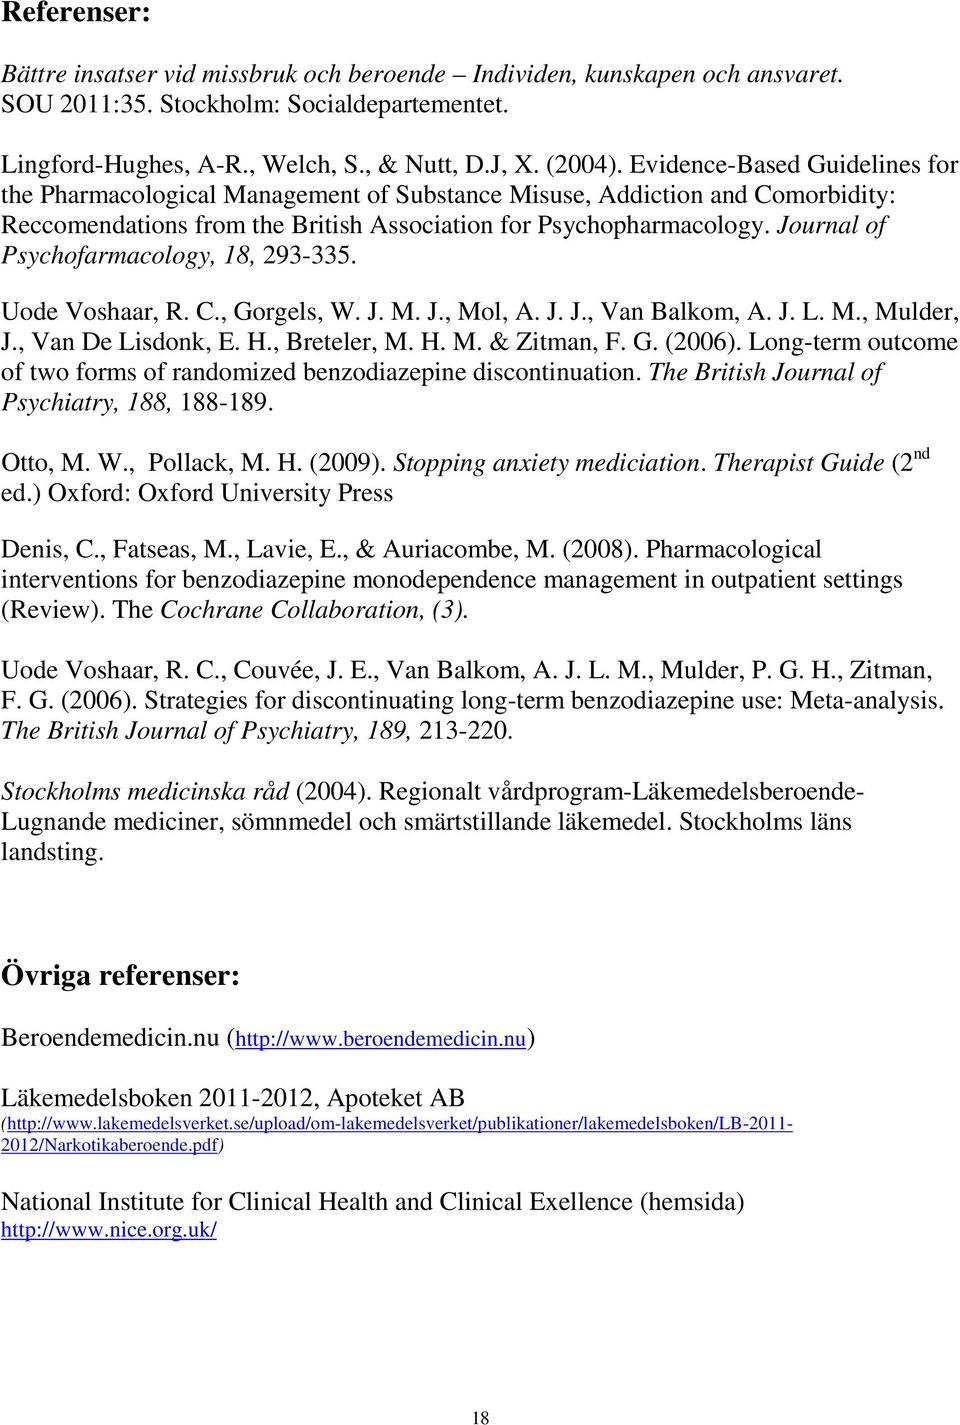 Journal of Psychofarmacology, 18, 293-335. Uode Voshaar, R. C., Gorgels, W. J. M. J., Mol, A. J. J., Van Balkom, A. J. L. M., Mulder, J., Van De Lisdonk, E. H., Breteler, M. H. M. & Zitman, F. G. (2006).